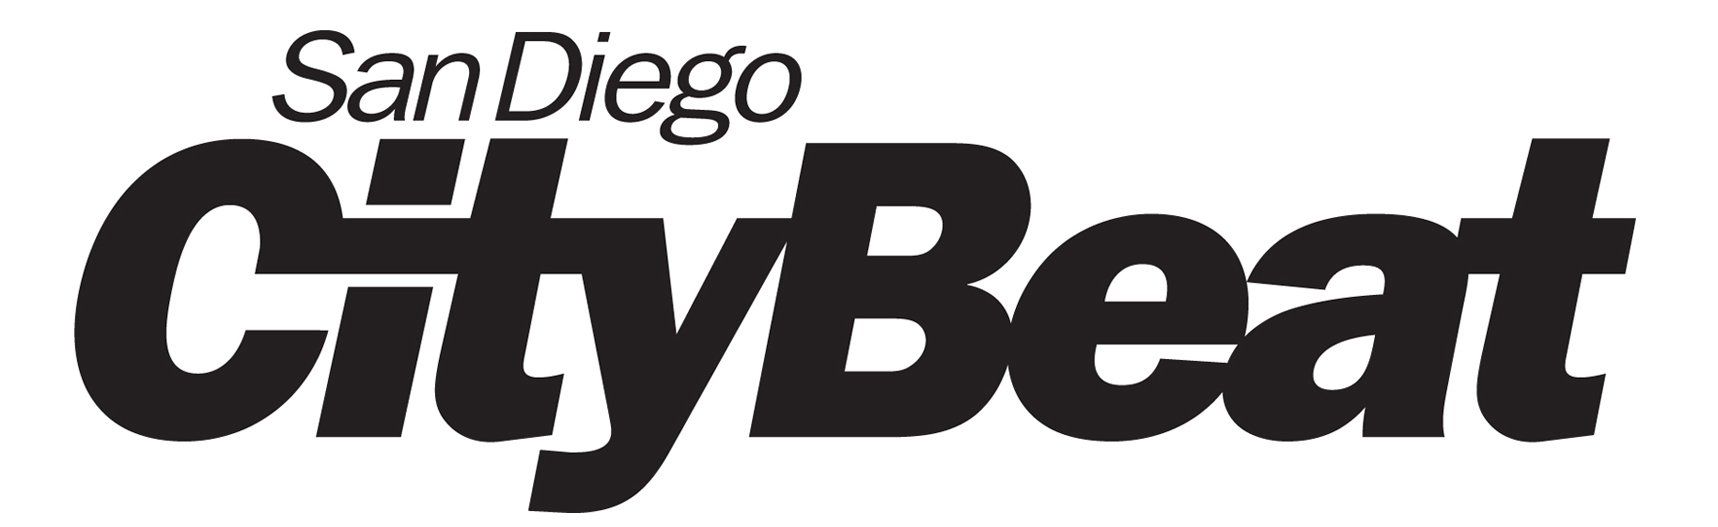 San Diego Citybeat - 2014